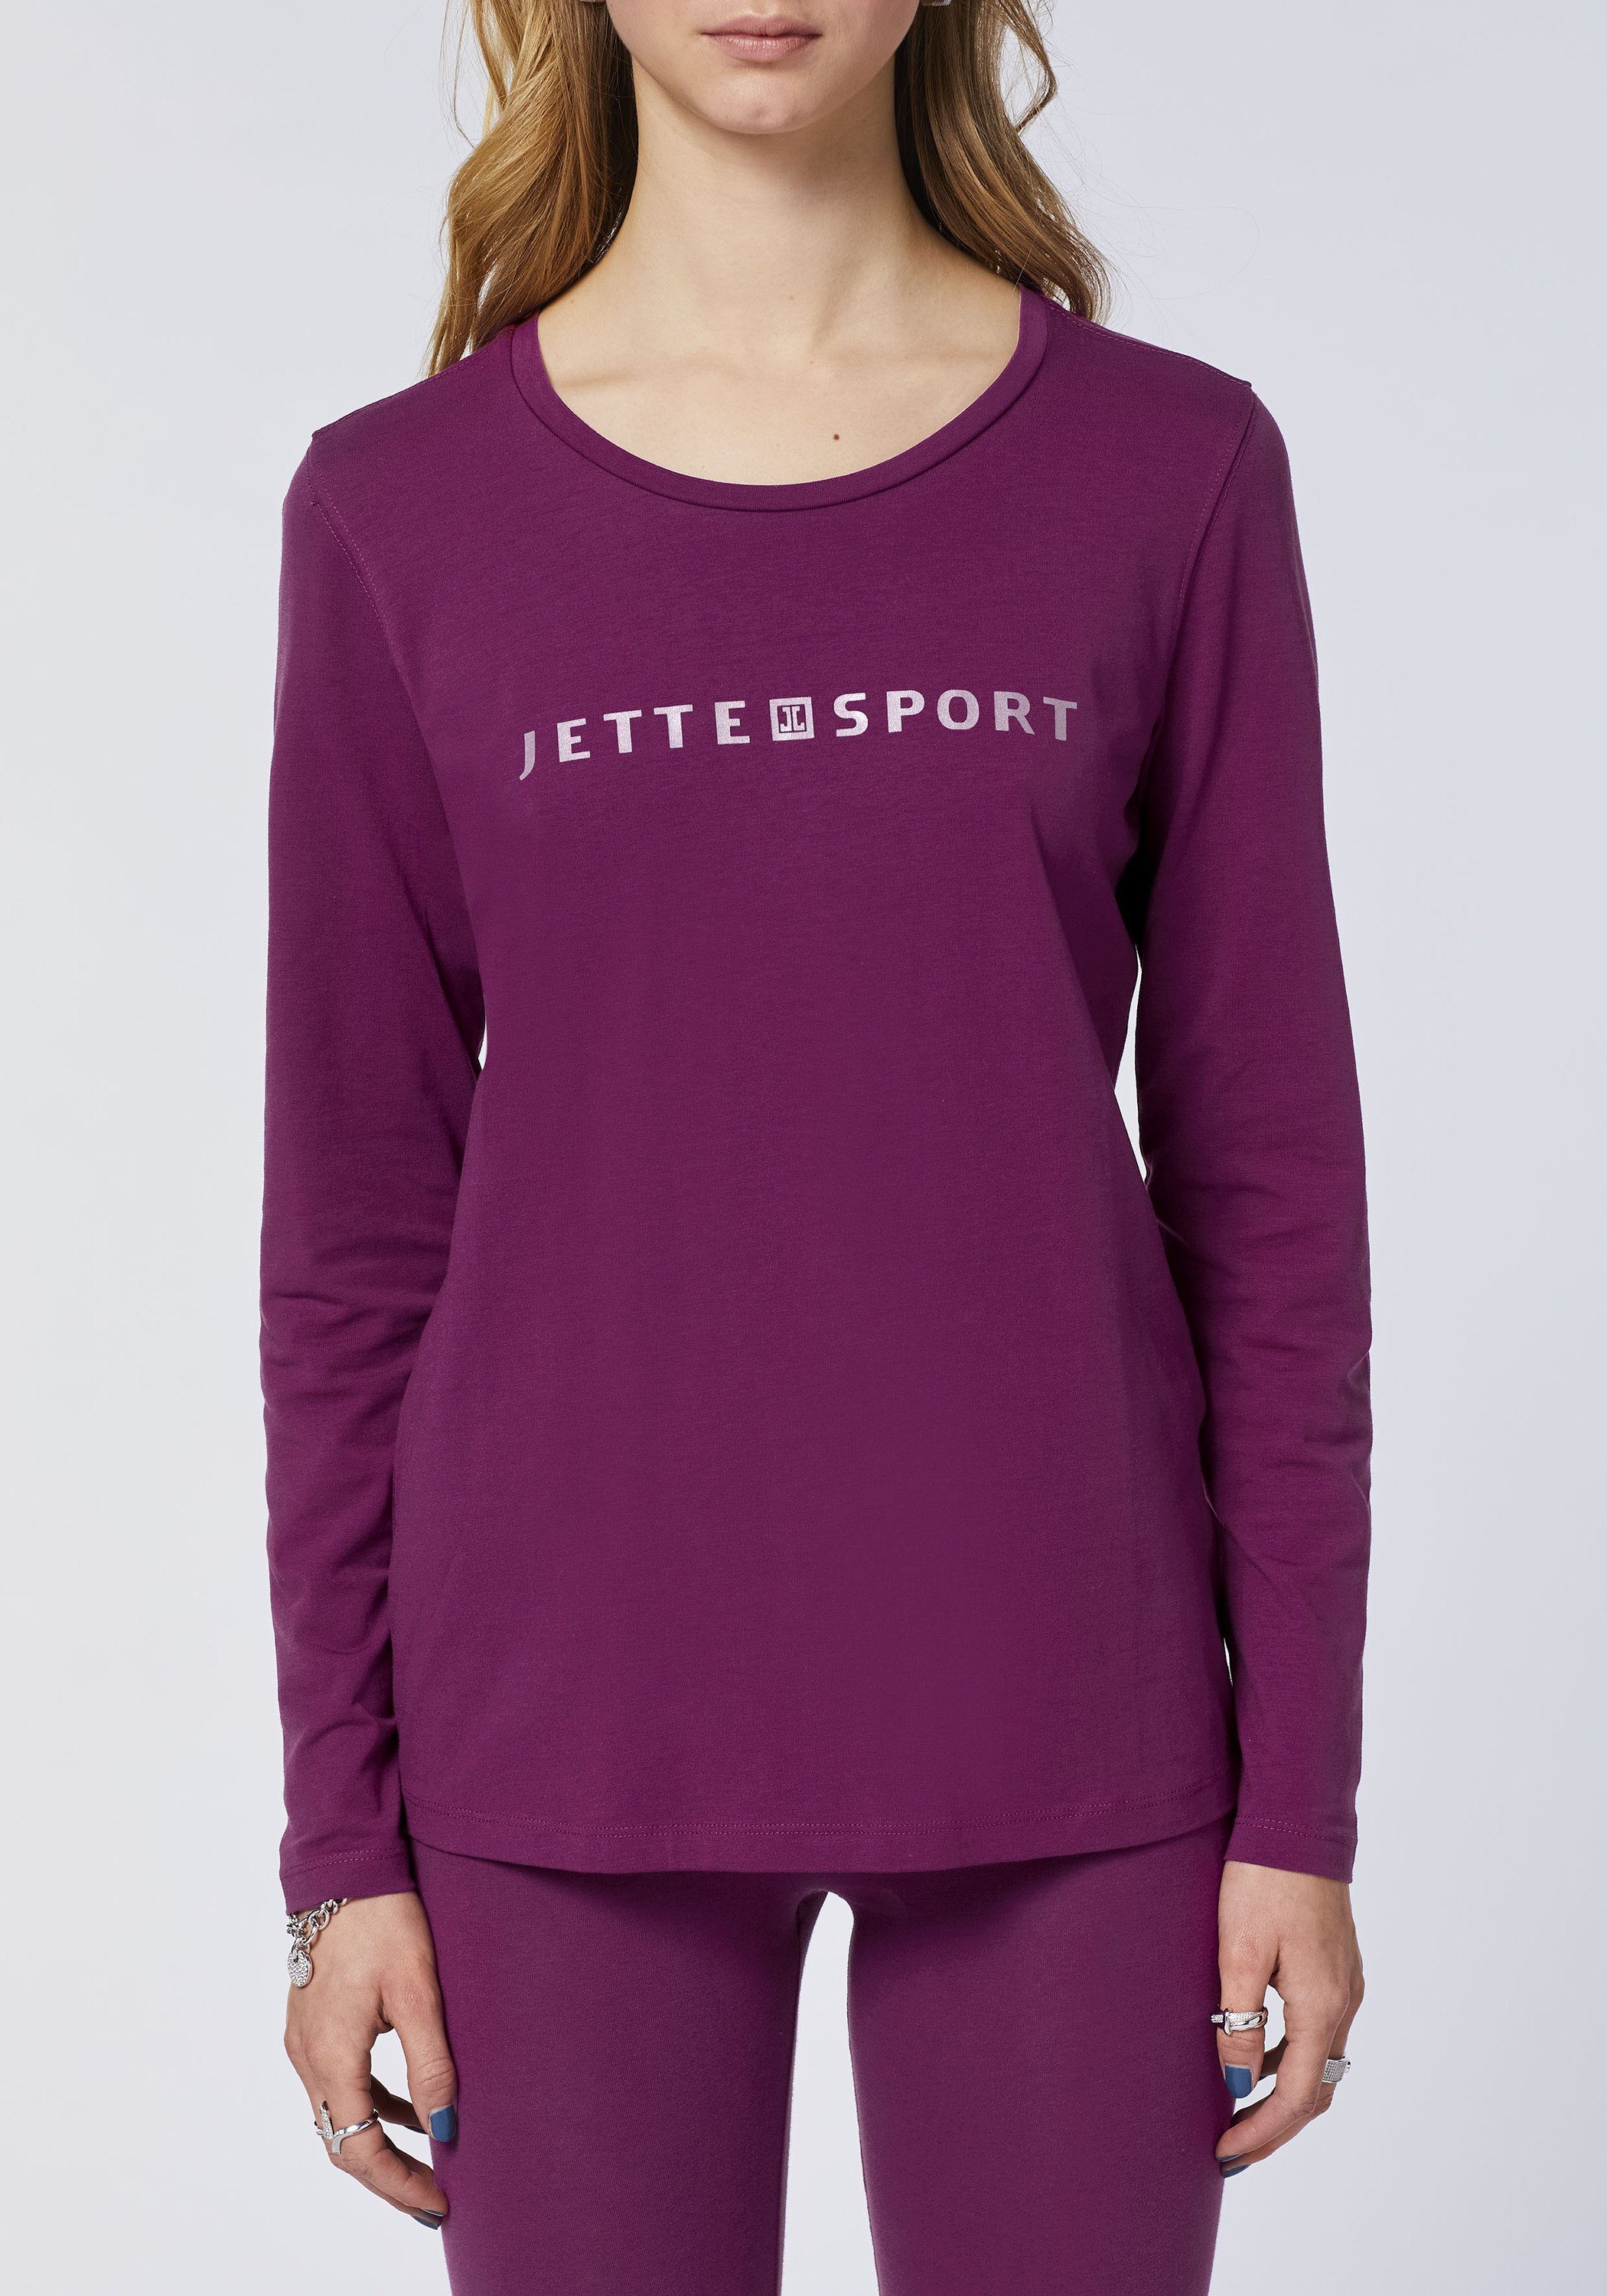 JETTE SPORT Langarmshirt mit 19-2524 Dark Purple Jette Sport Label-Druck